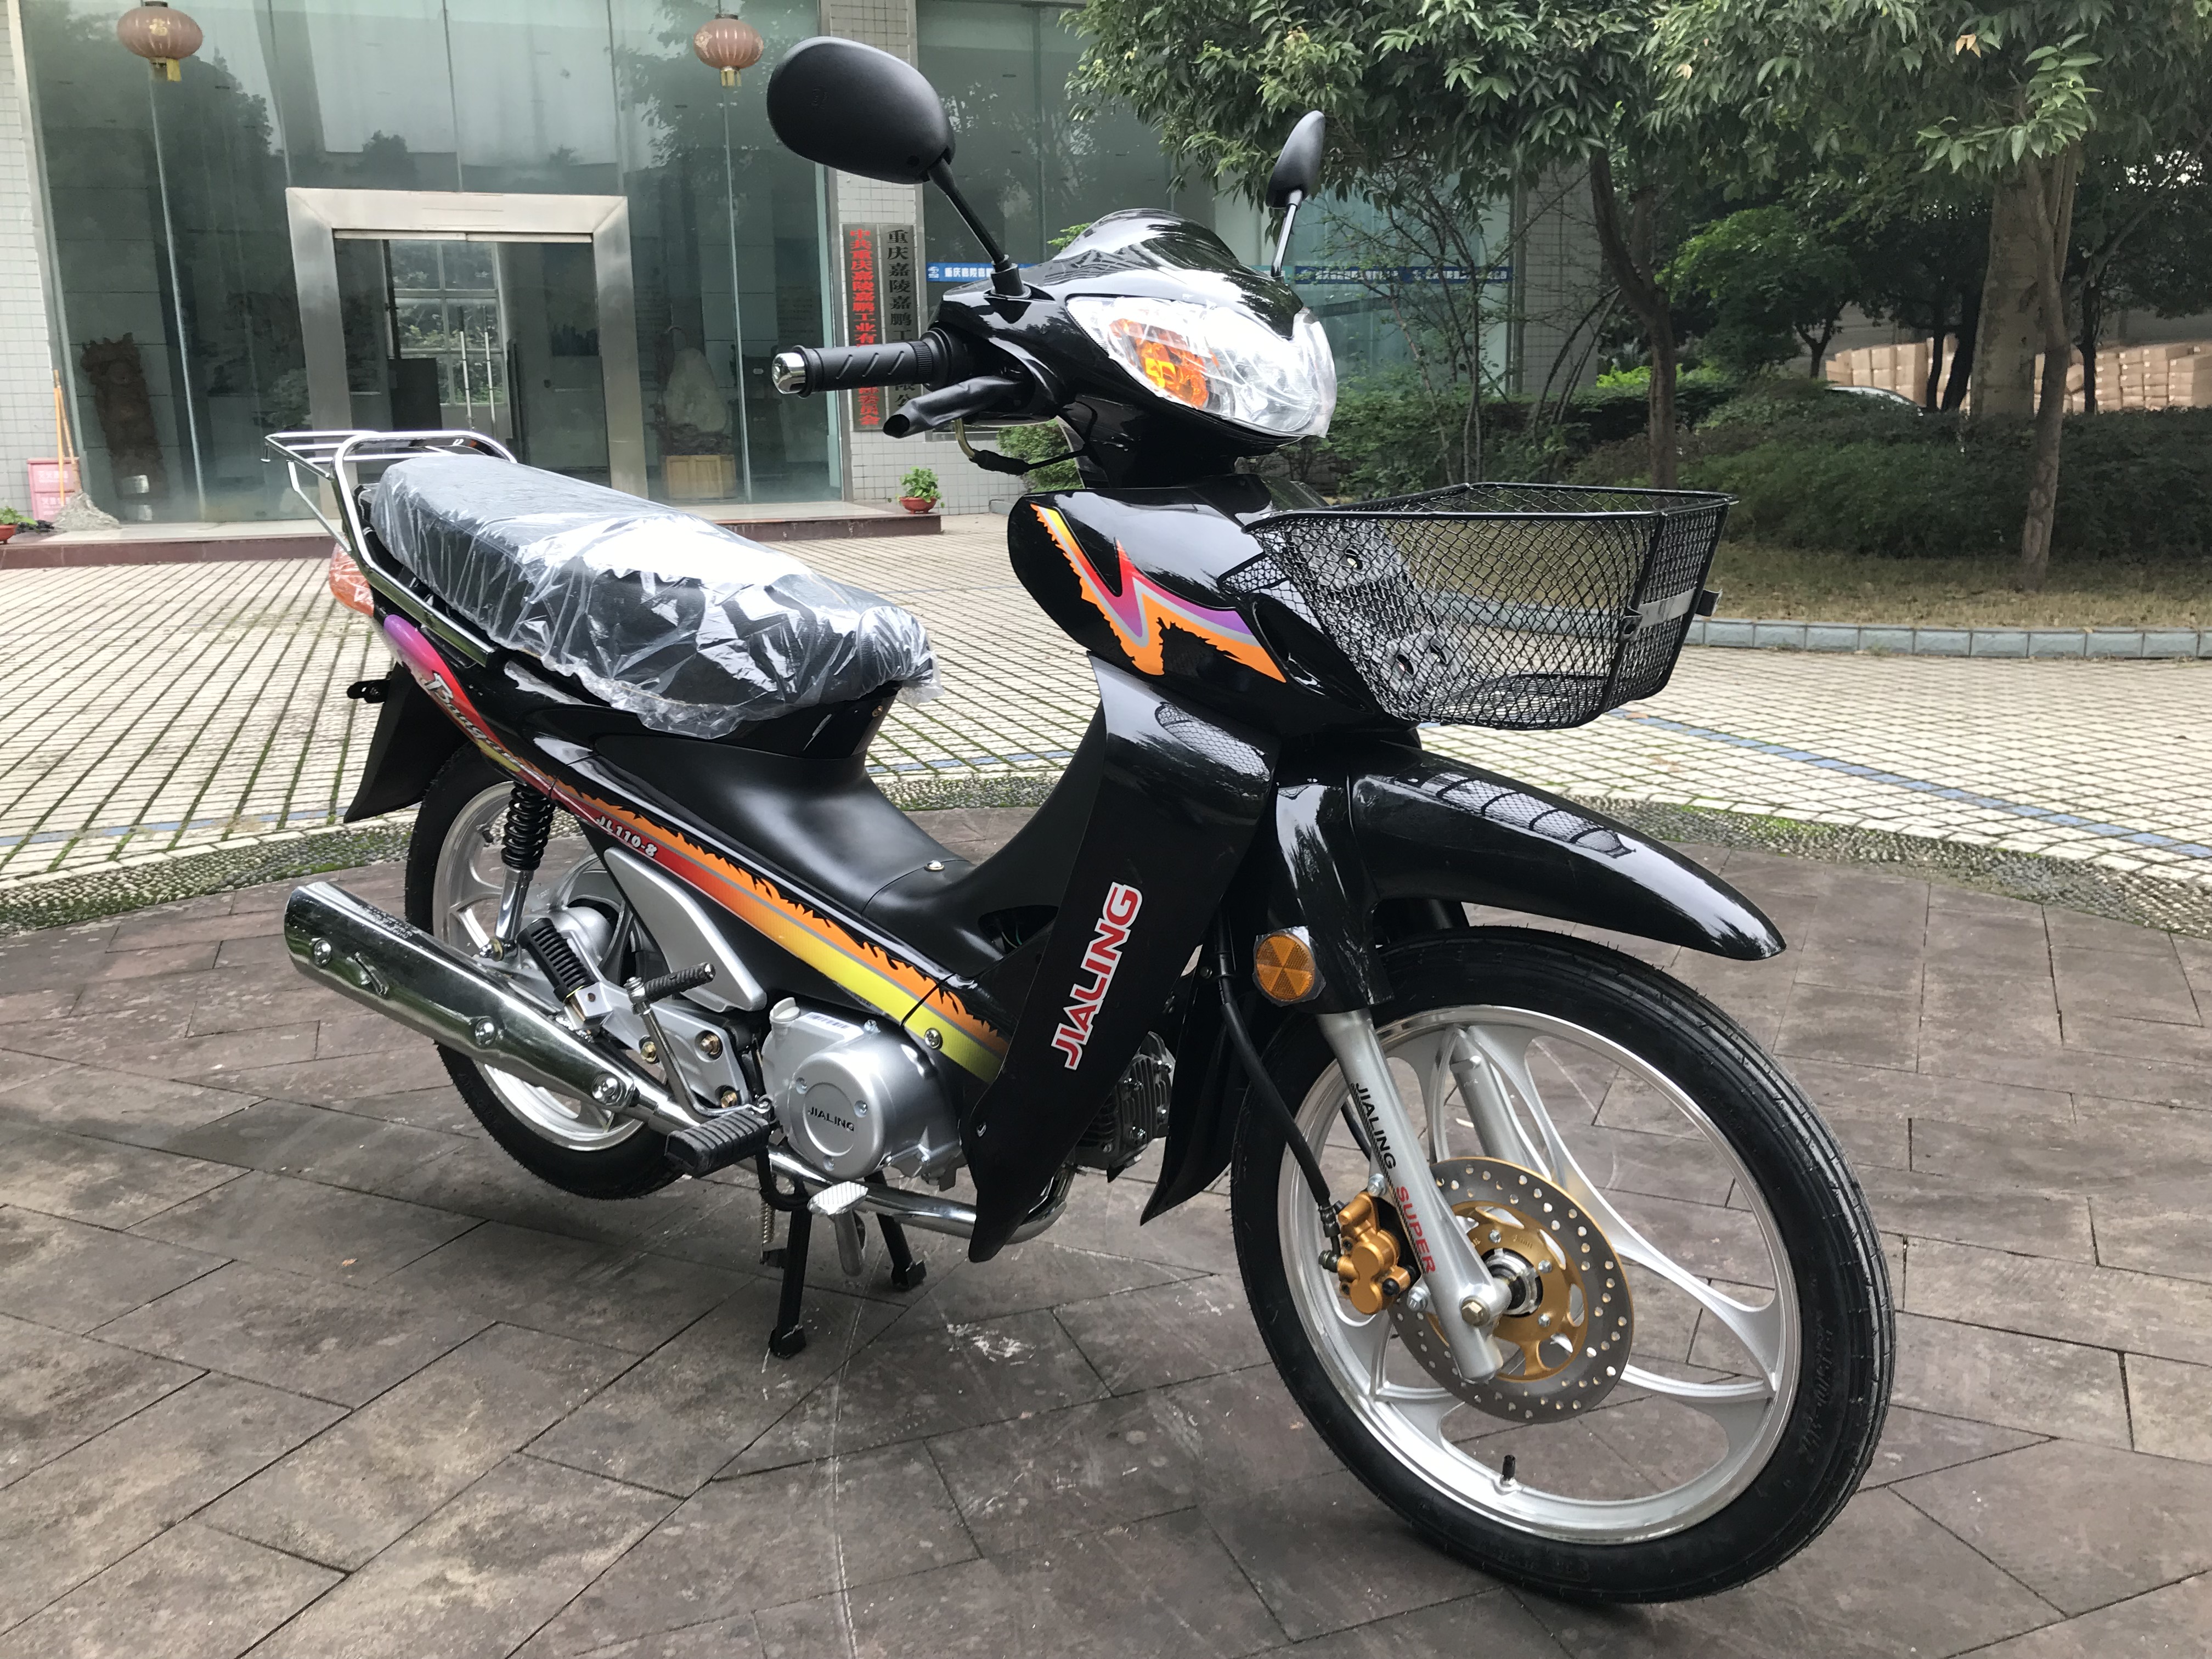 Jialing 110cc classic motorcycle